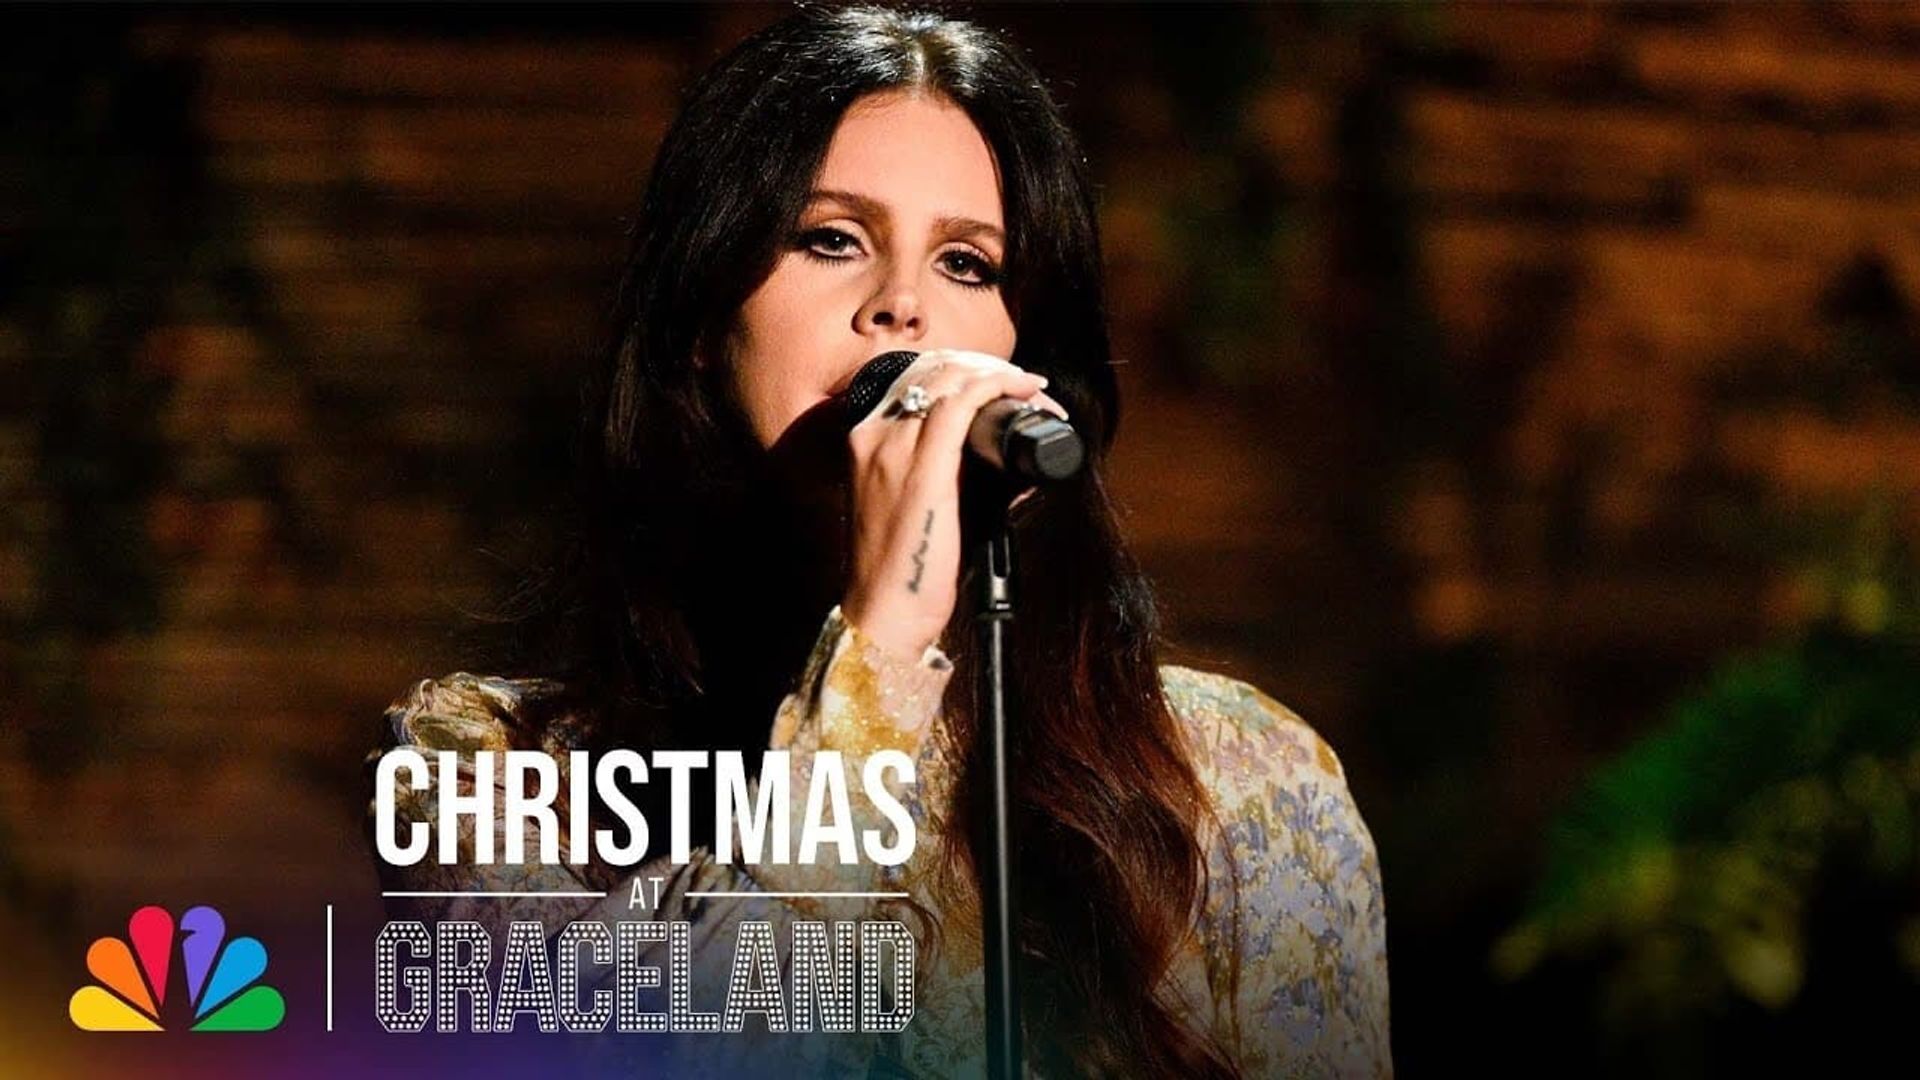 Christmas at Graceland background